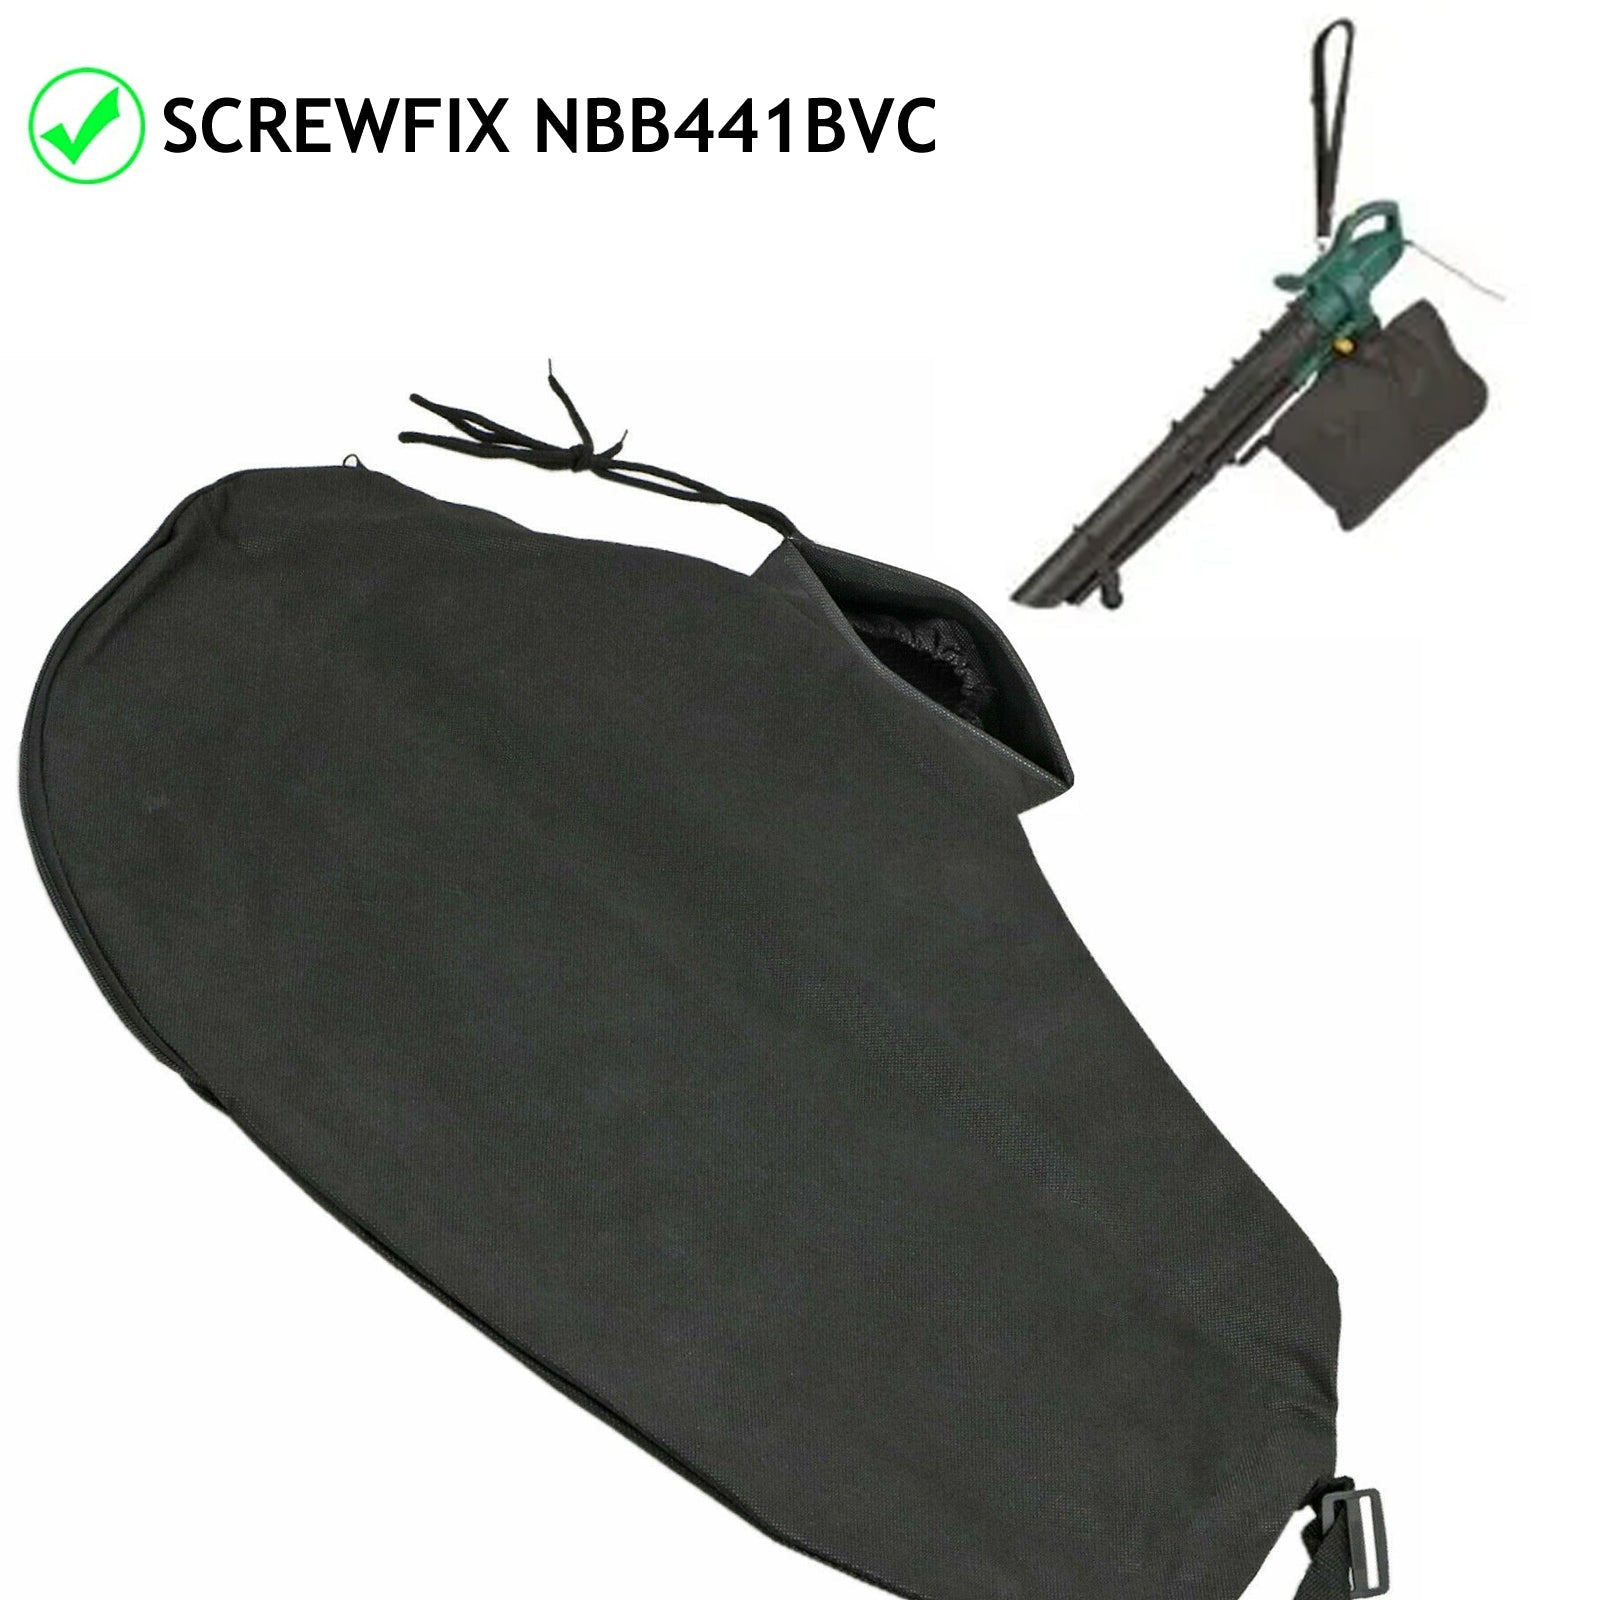 Debris Collection Bag Sack for SCREWFIX NBB441BVC Garden Vac Leaf Blower Vacuum x 2